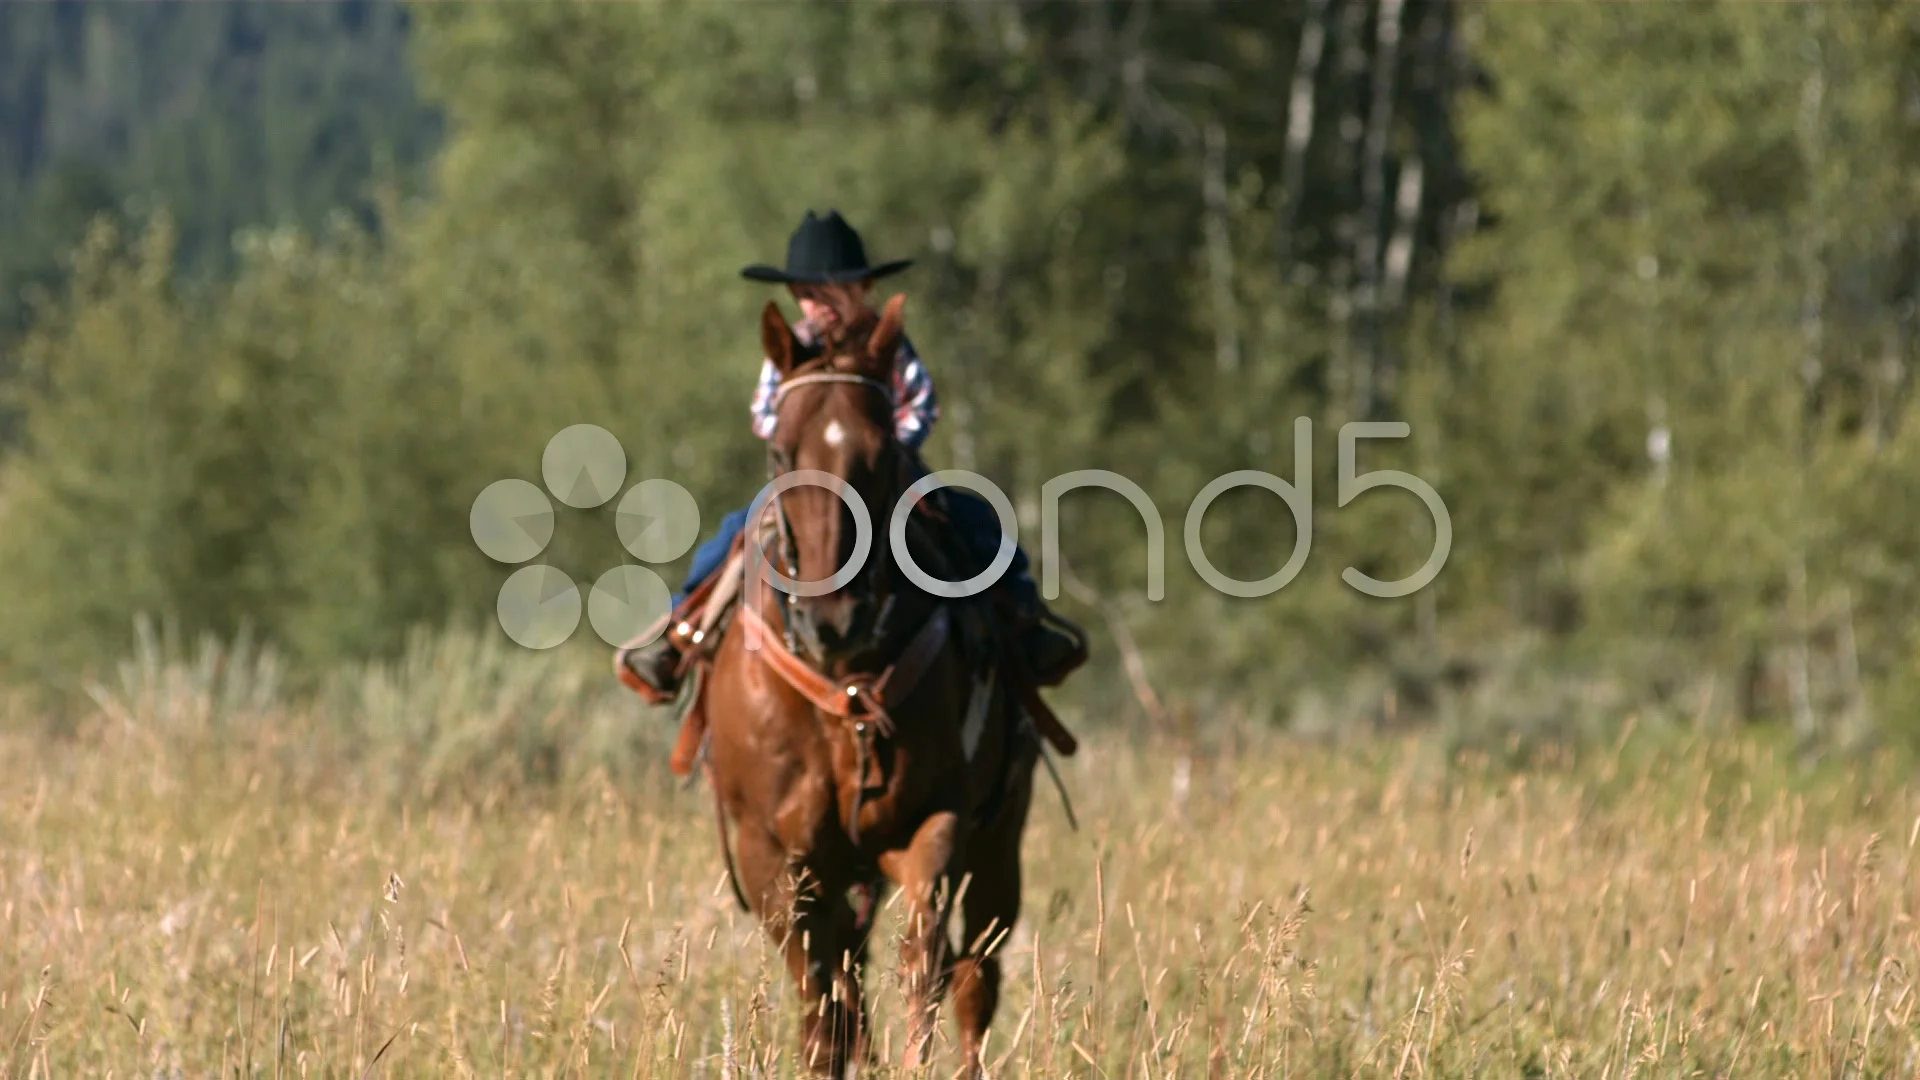 AV001- Caoboy Riding Horse